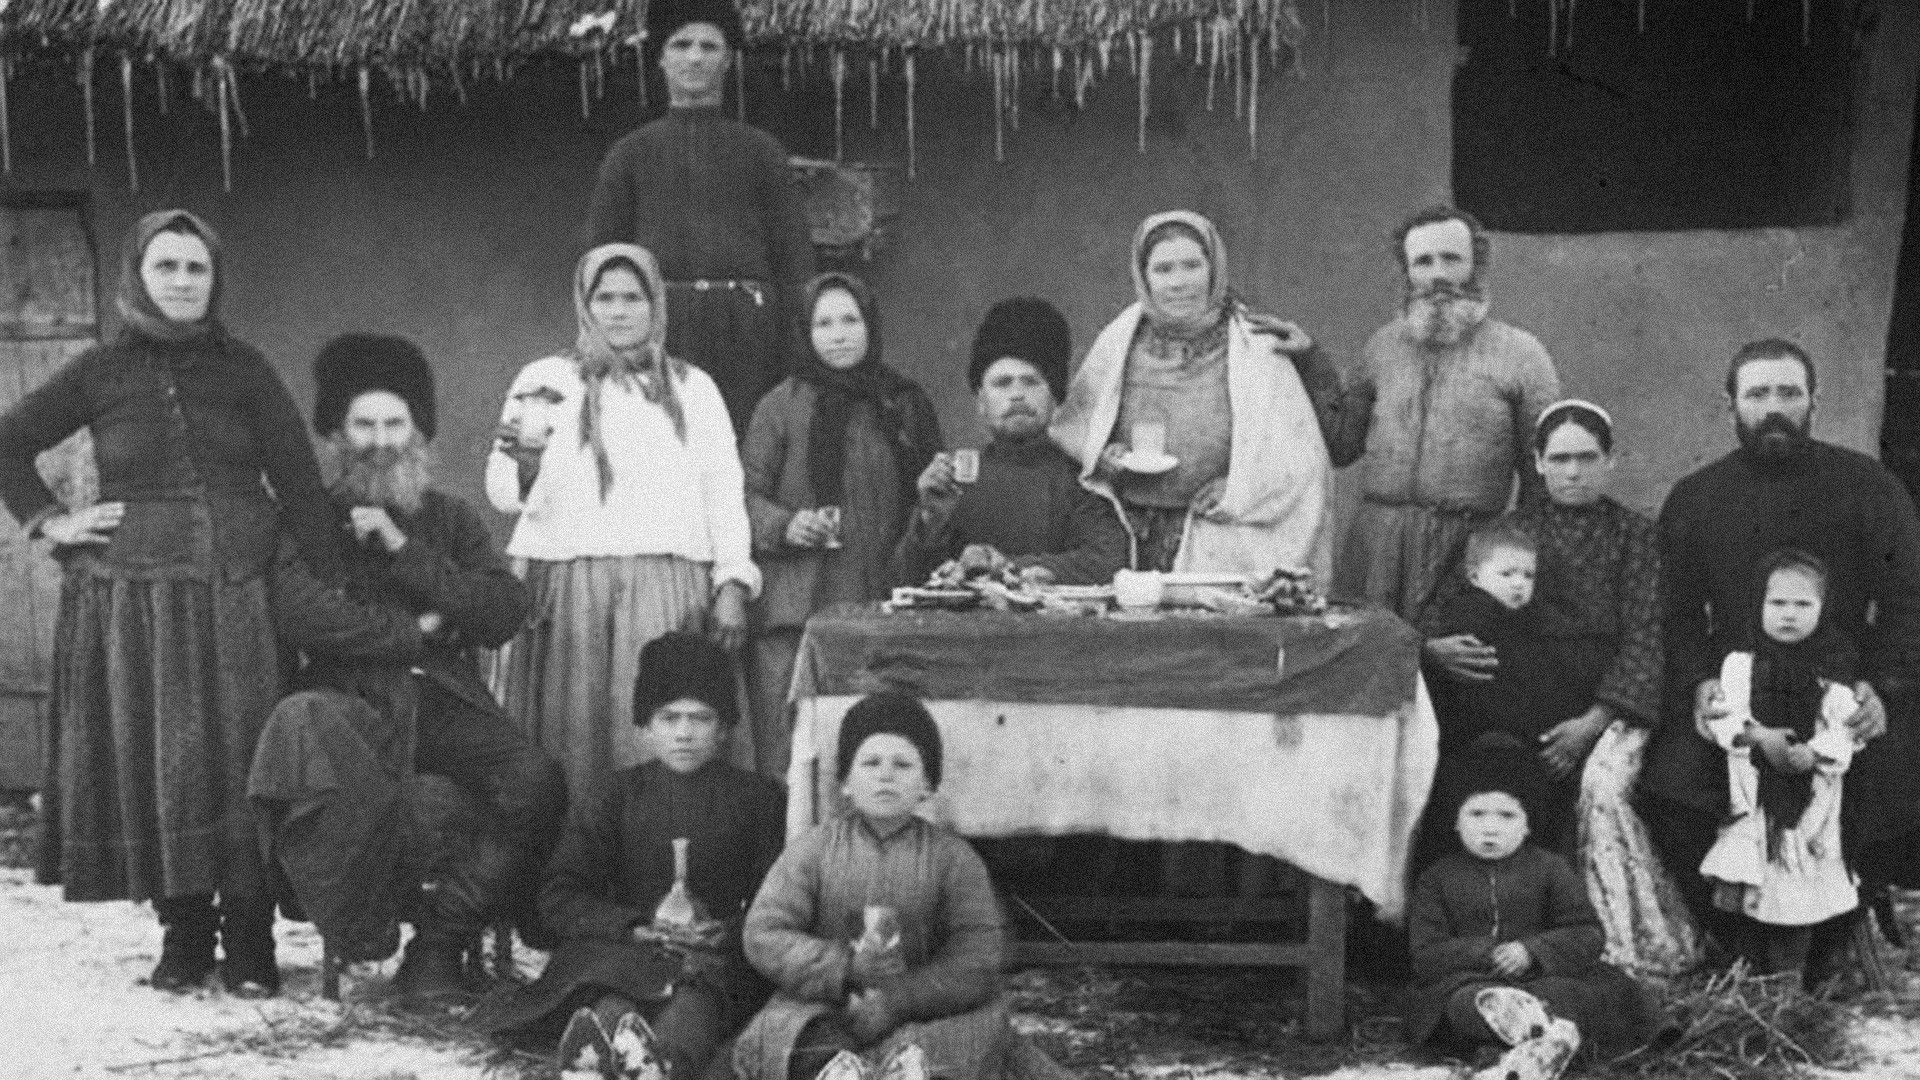 A cossack family portrait, 1900s